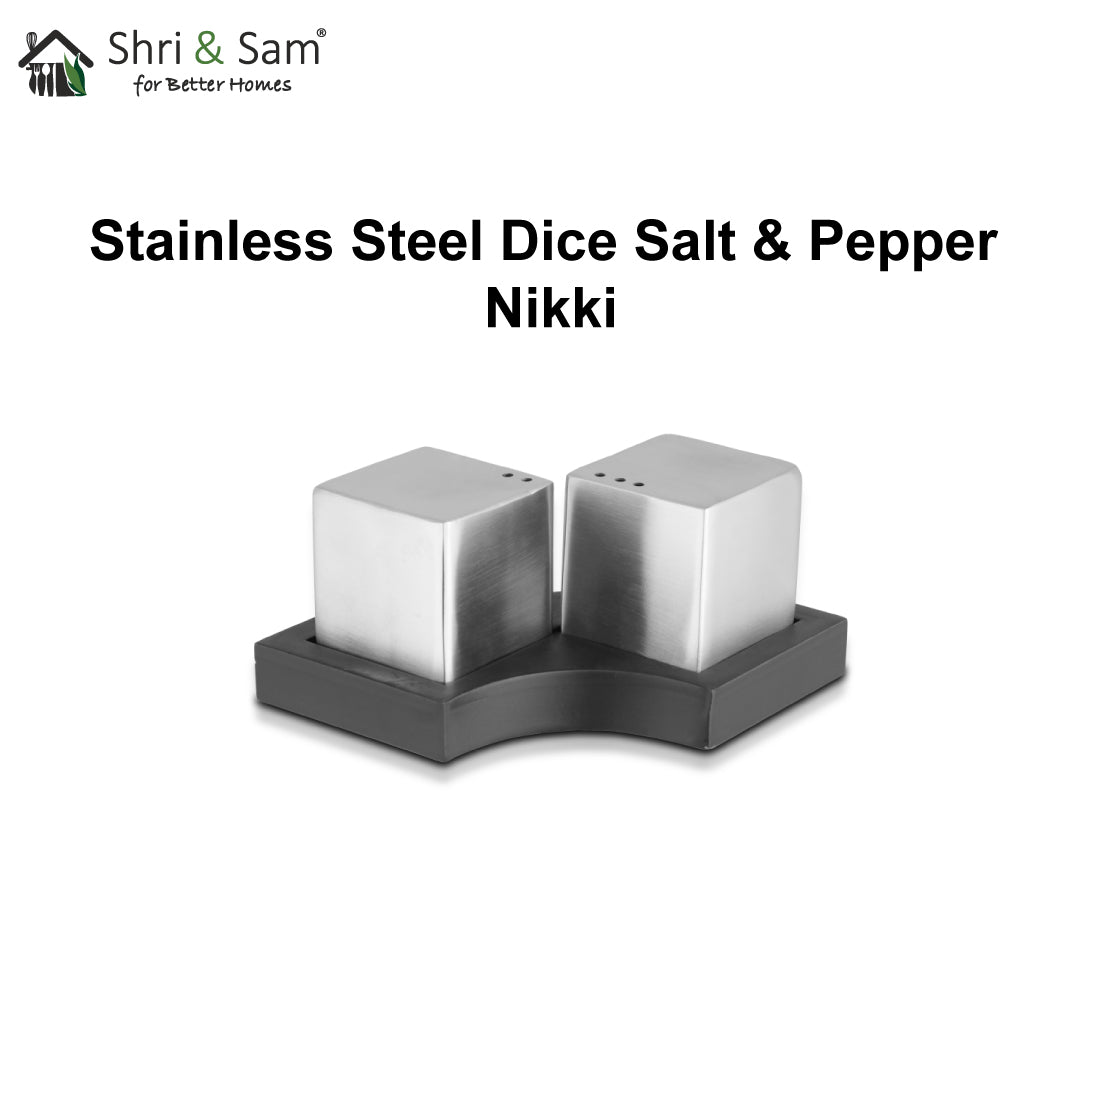 Stainless Steel Dice Salt & Pepper Nikki